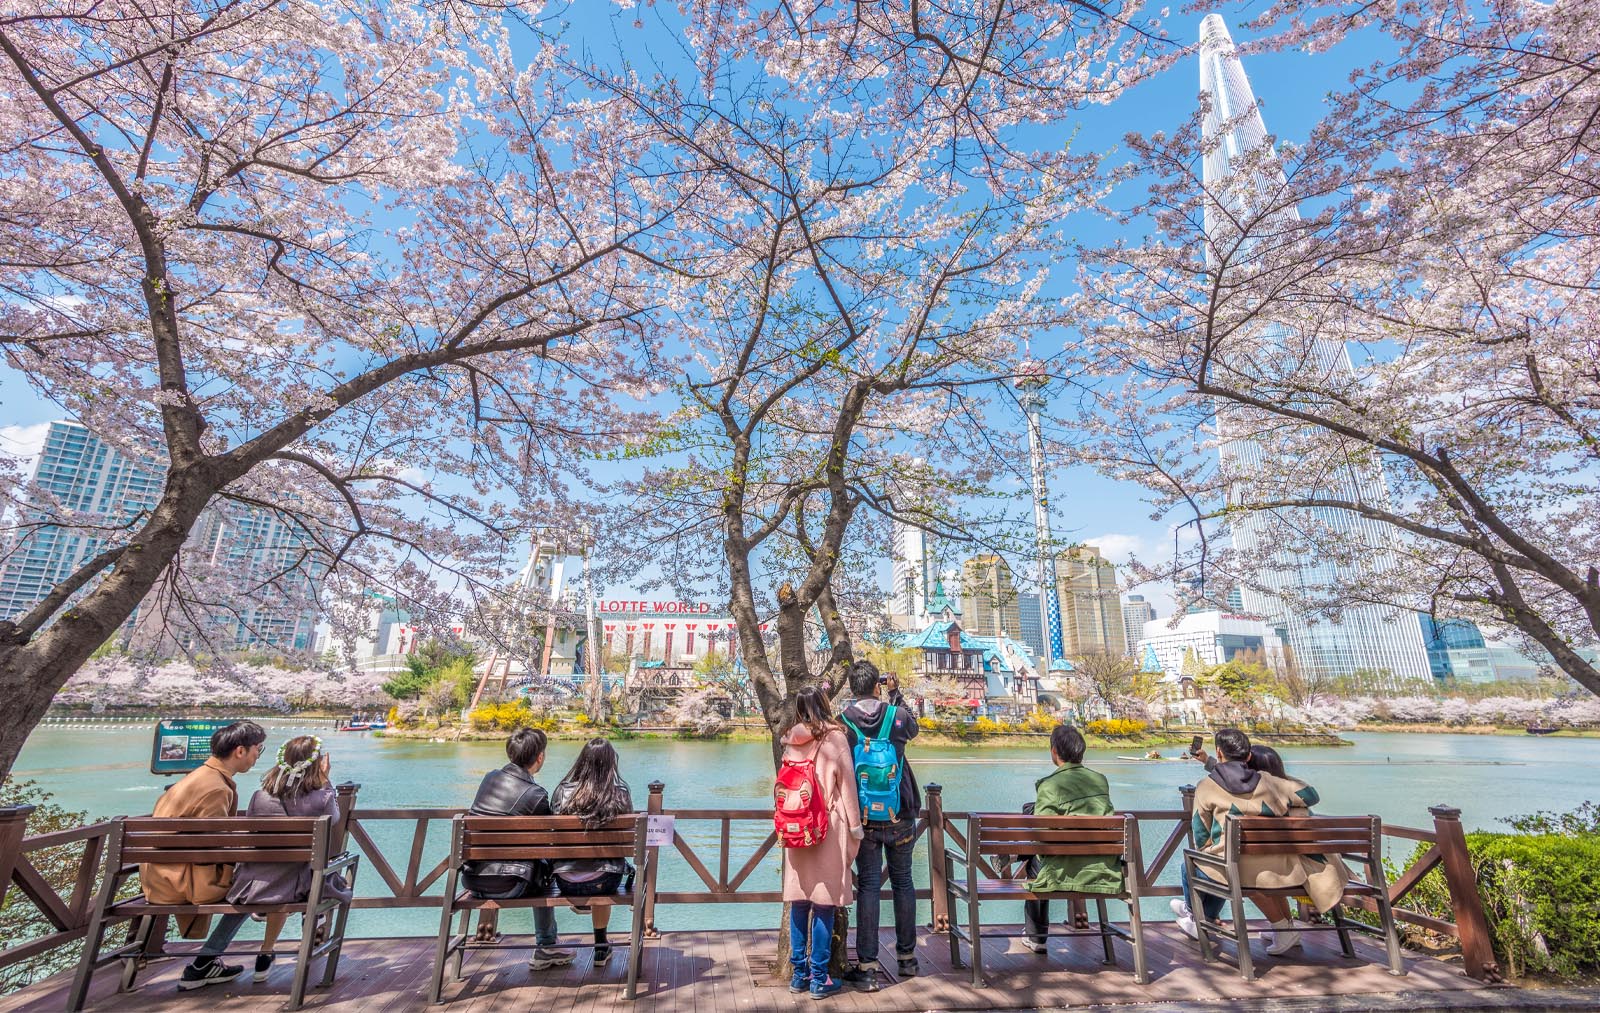 Lotte-world-tower-seokchhon-lake-spring-cherry-blossom